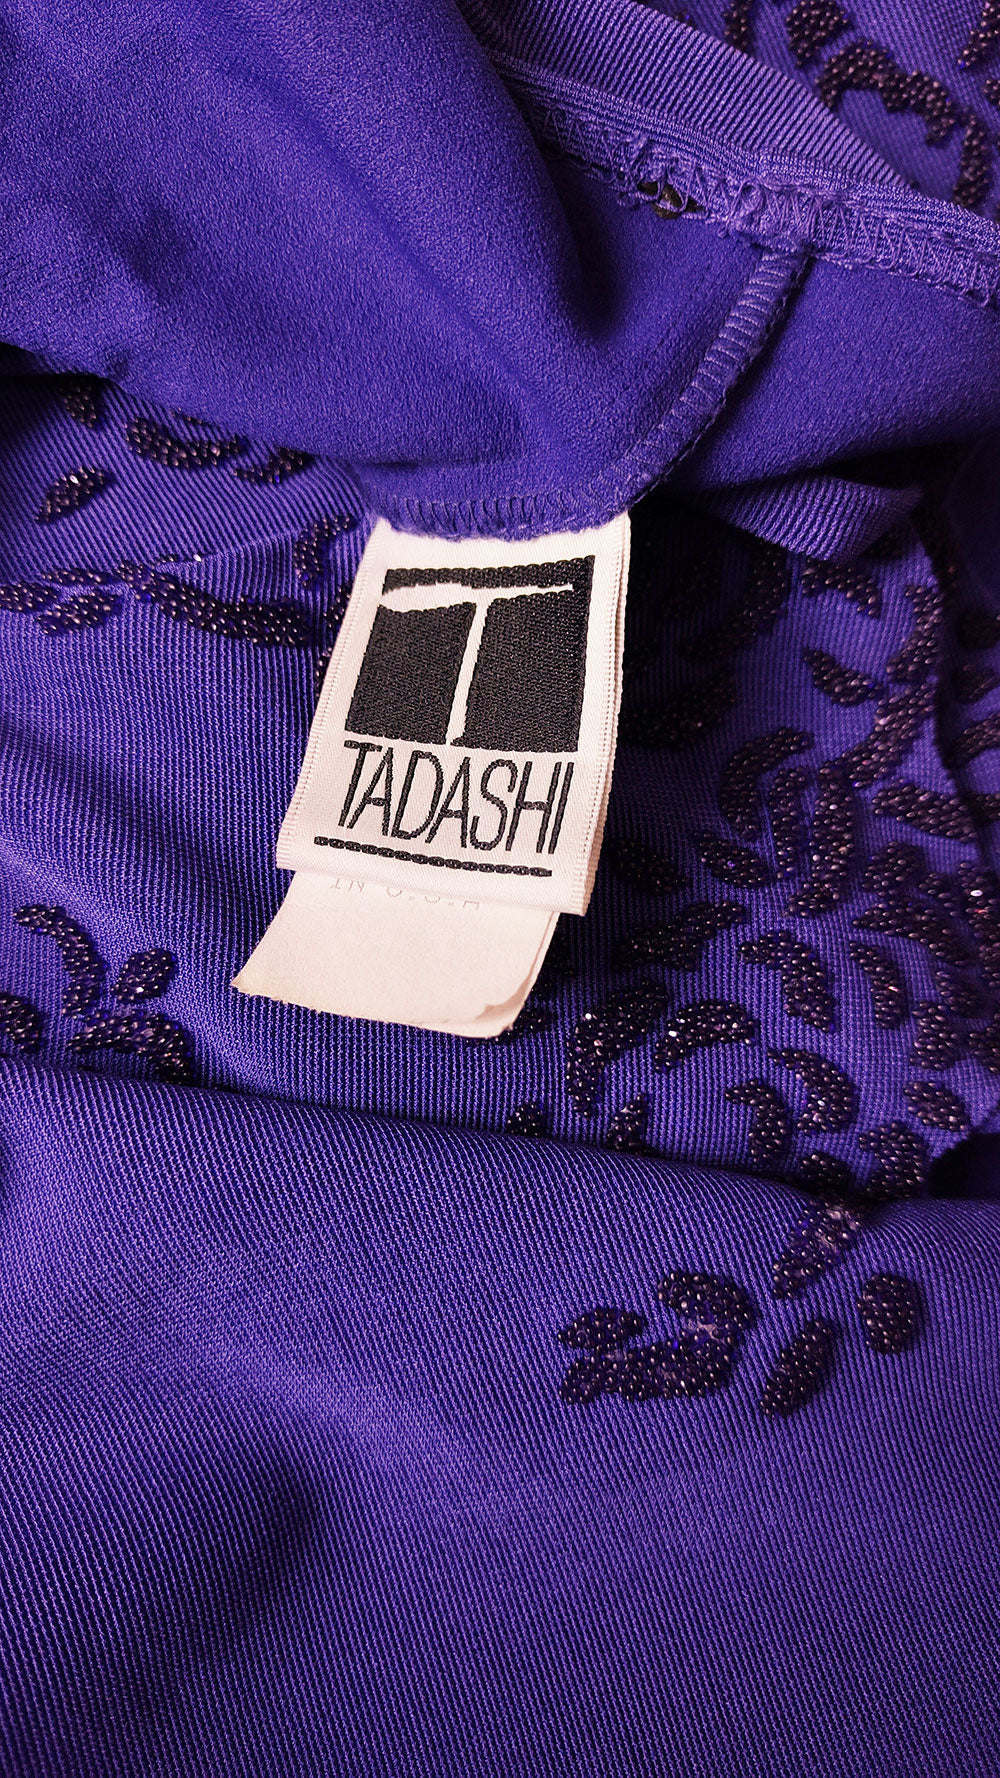 Tadashi Vintage Violet Jersey Sheer Cut Out Mesh Party Dress